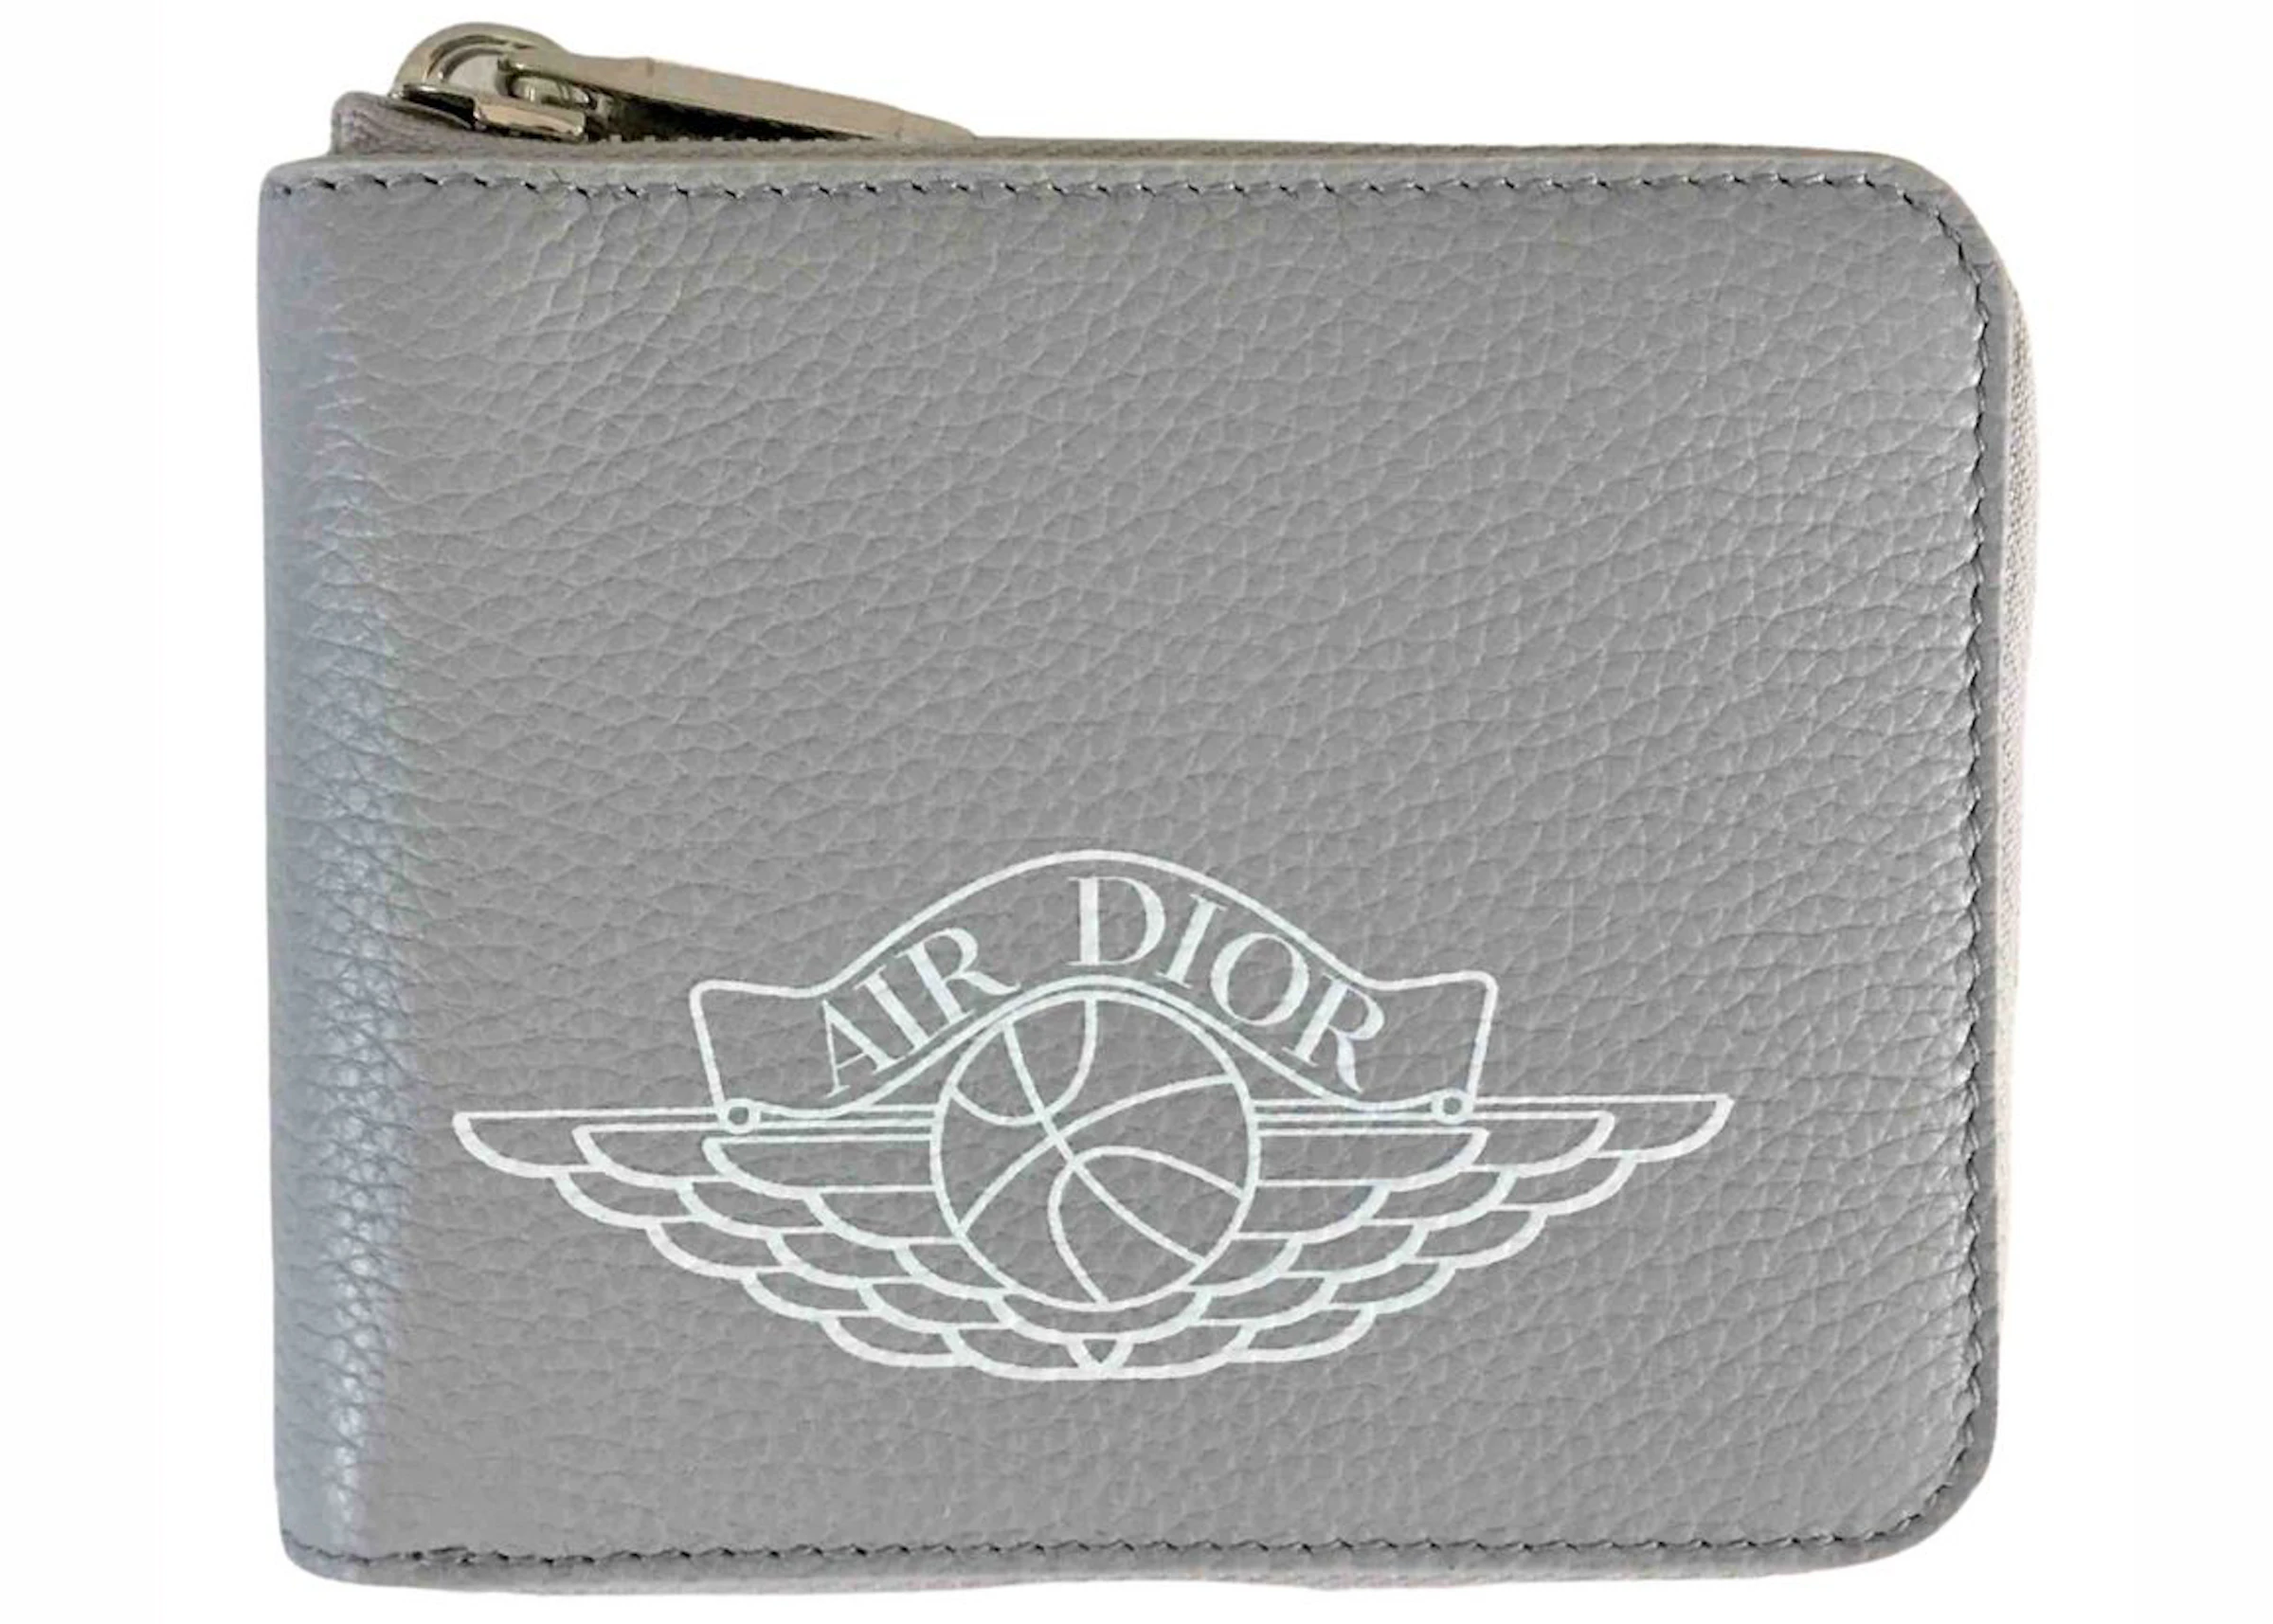 Dior x Jordan Wings Zip Wallet (4 Card Slot) in Calfskin with Silver-tone US